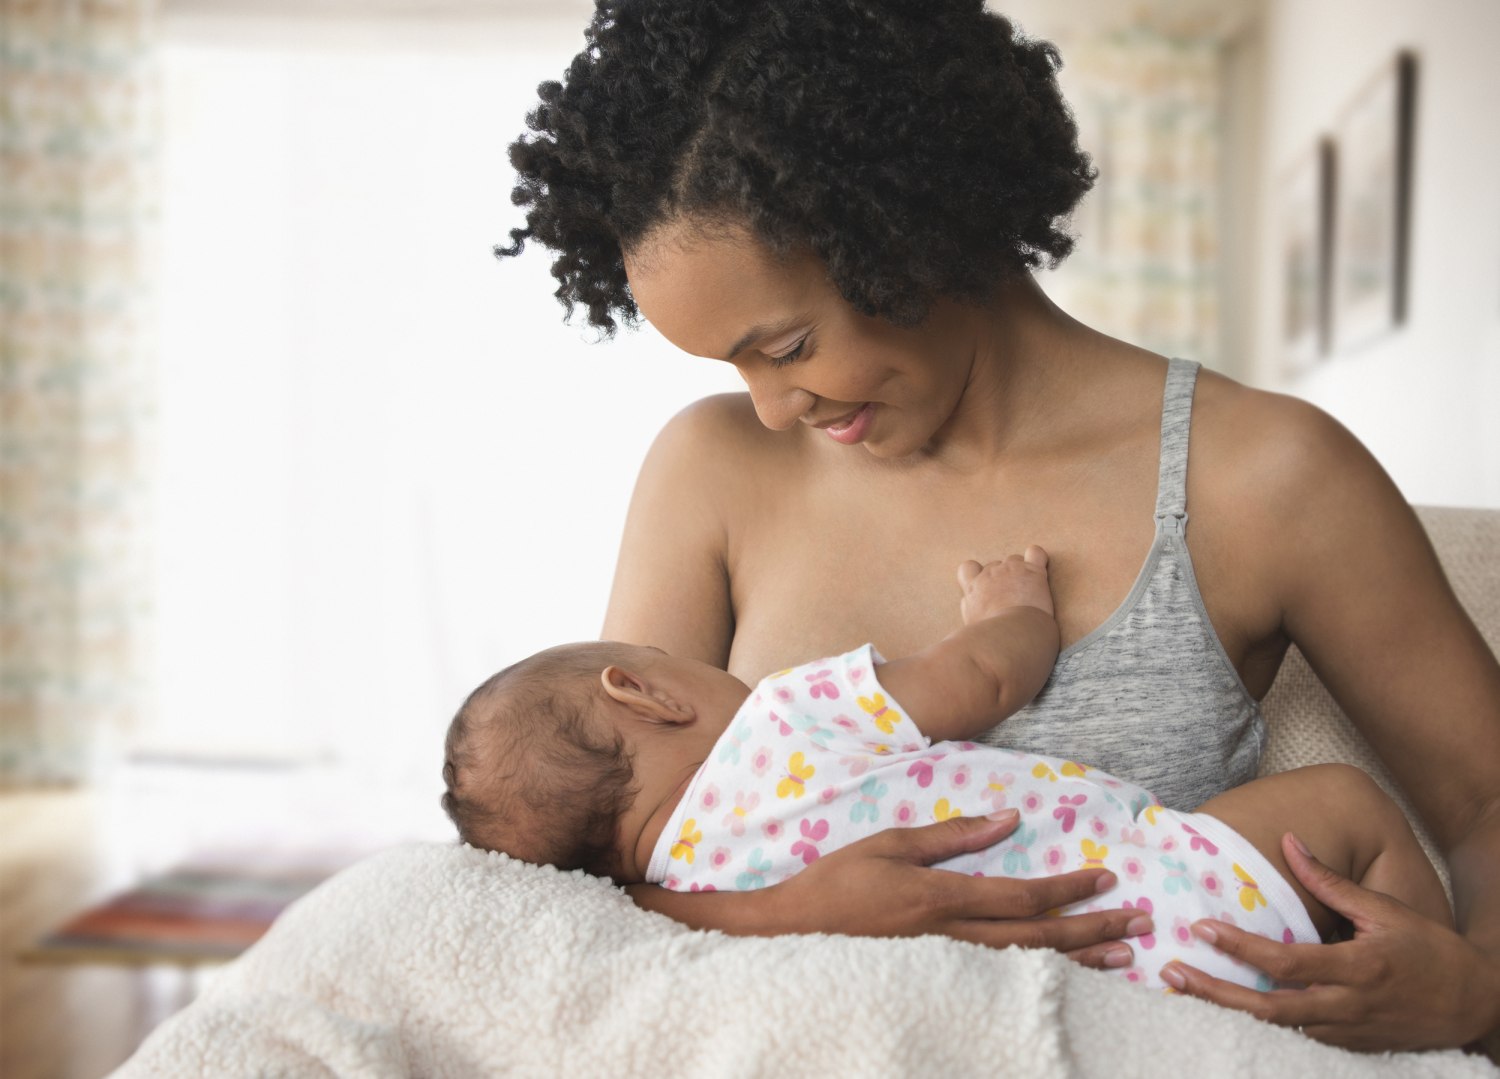 https://media-cldnry.s-nbcnews.com/image/upload/t_fit-1500w,f_auto,q_auto:best/newscms/2016_34/1680351/160822-breastfeeding-mbe-649p_2.jpg